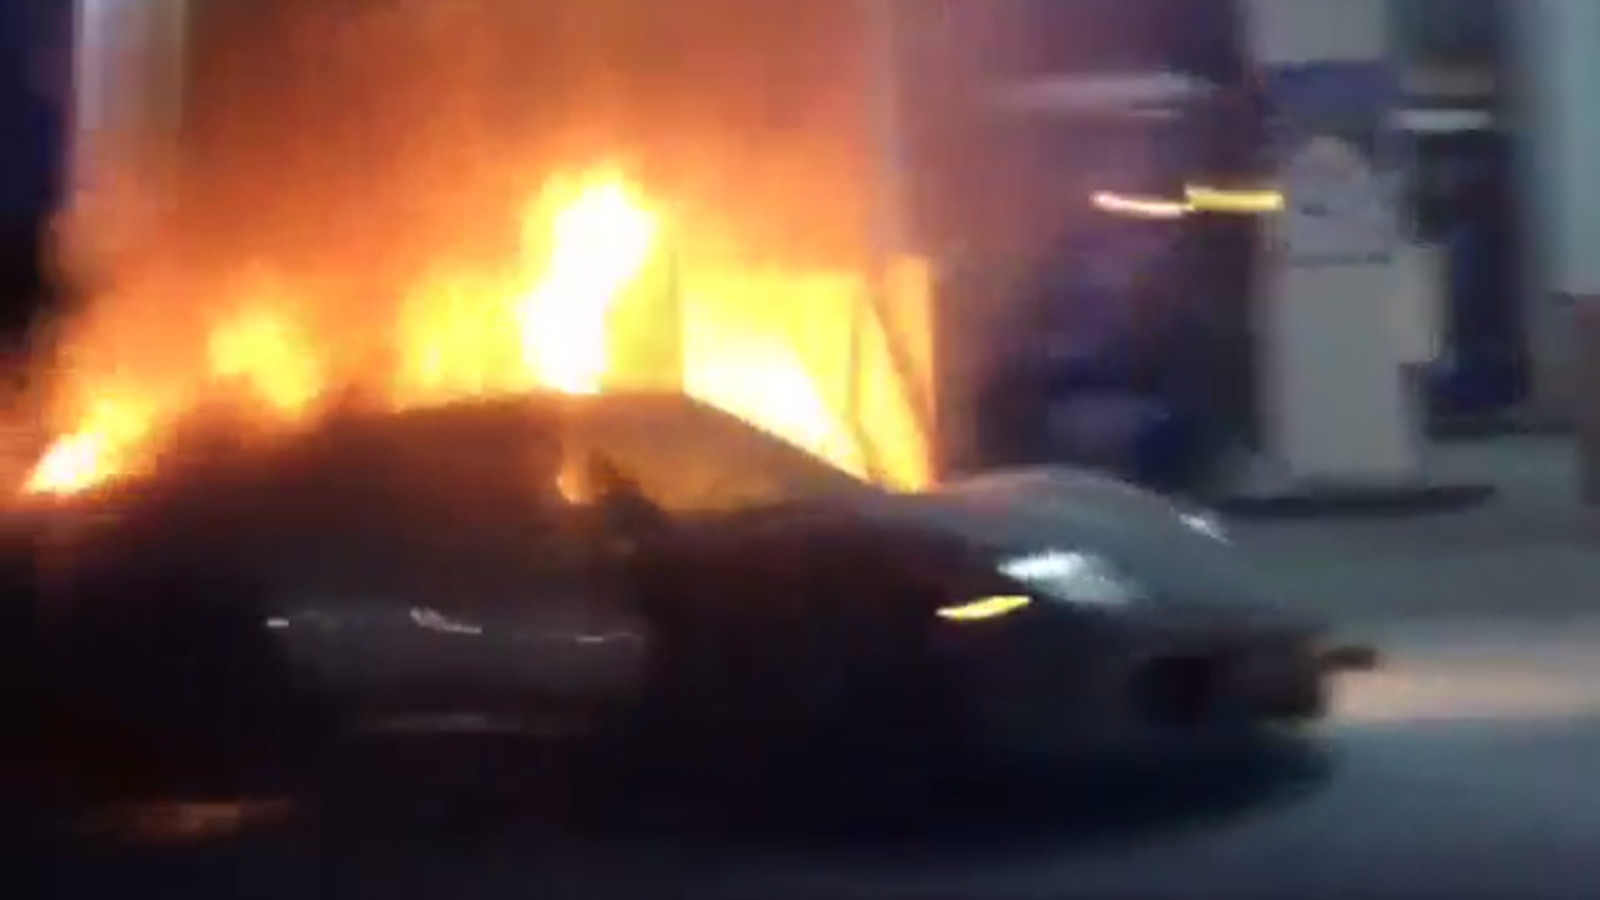 Porsche 918 Spyder on fire at gas station in Toronto, Canada